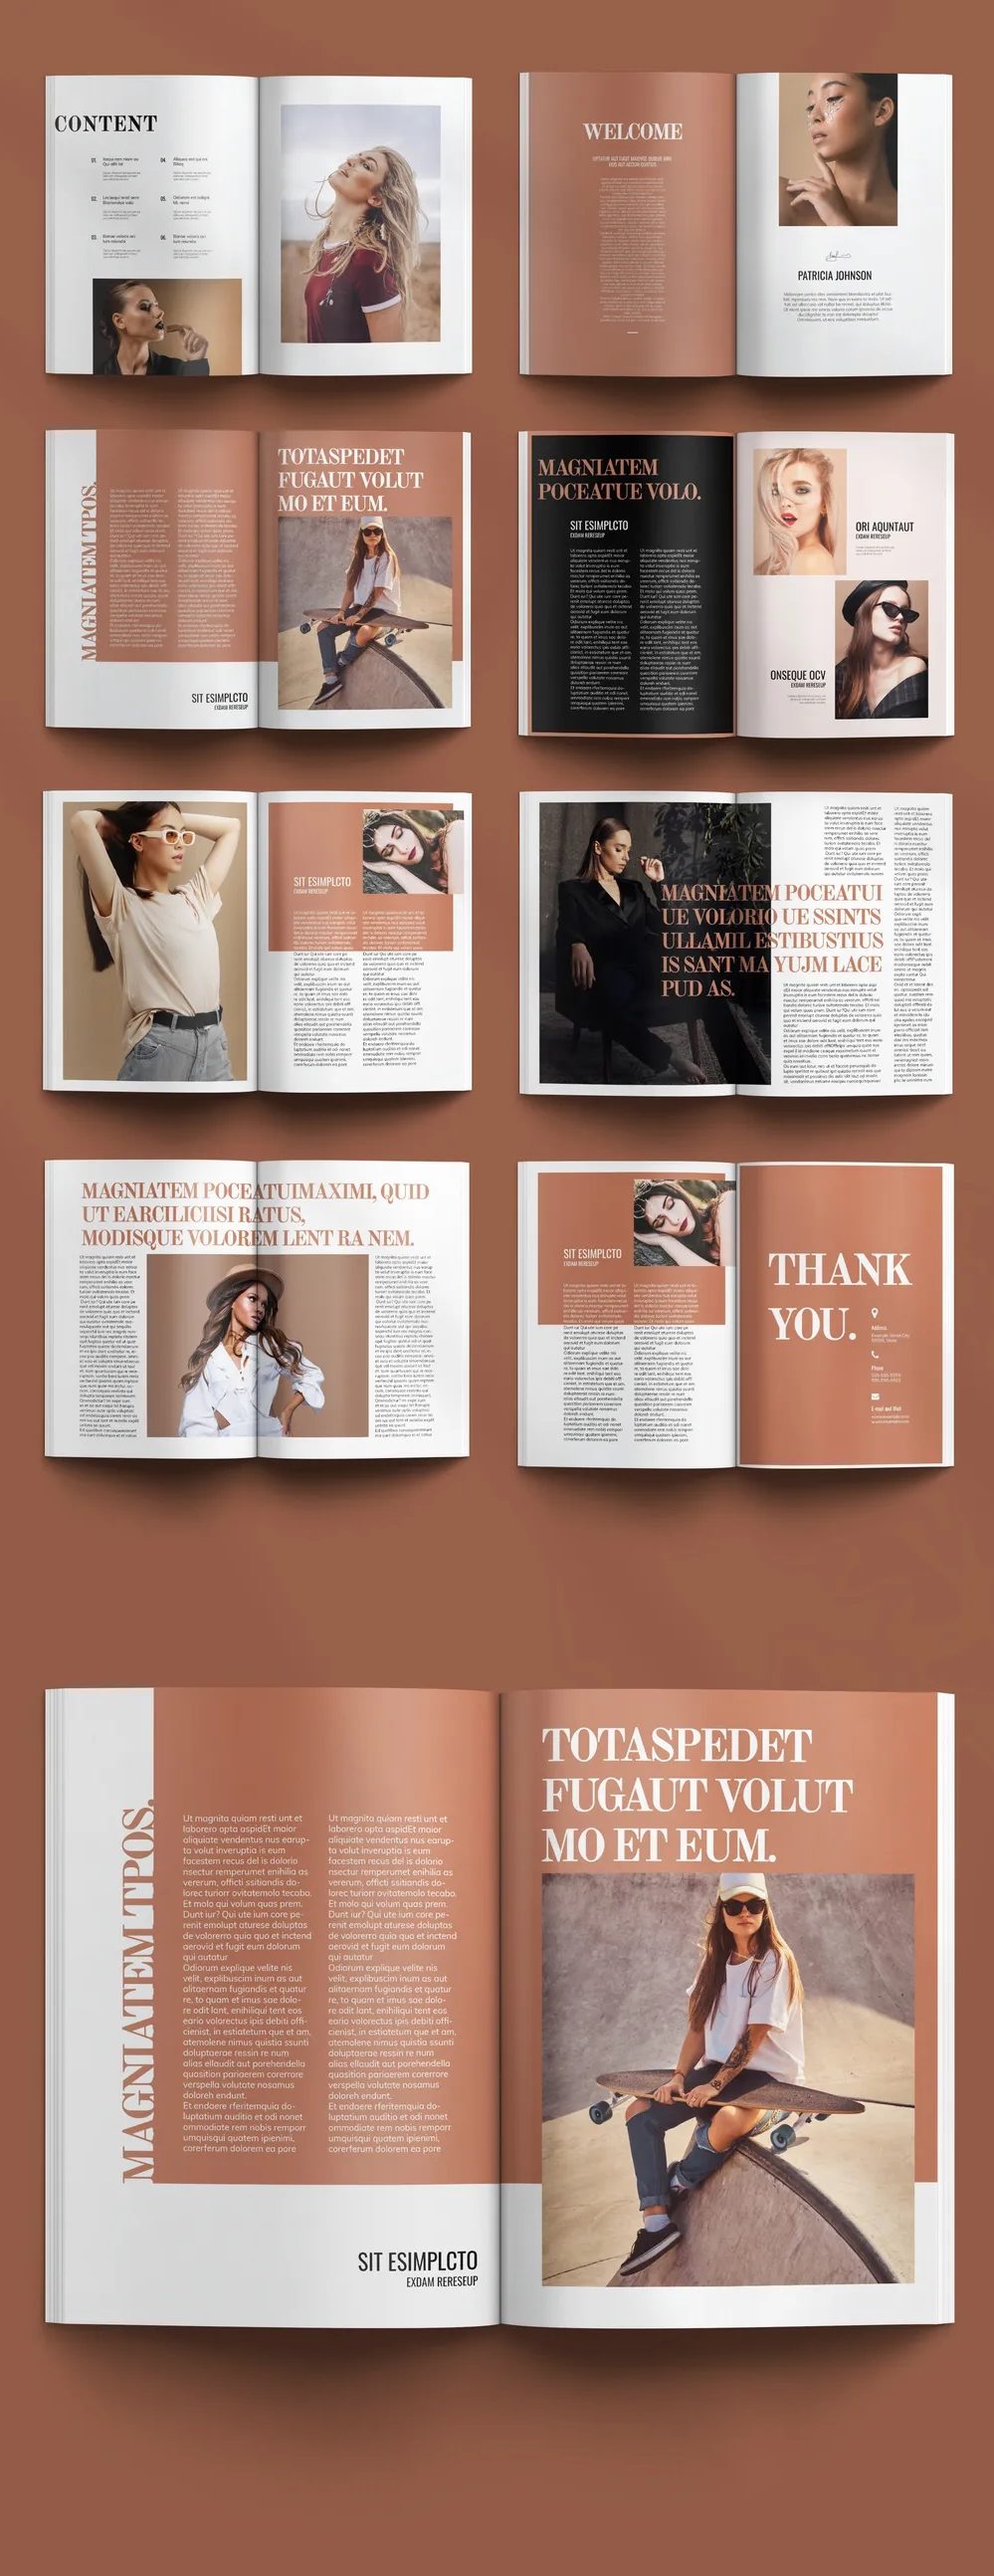 Adobestock - Magazine Layout 714758430